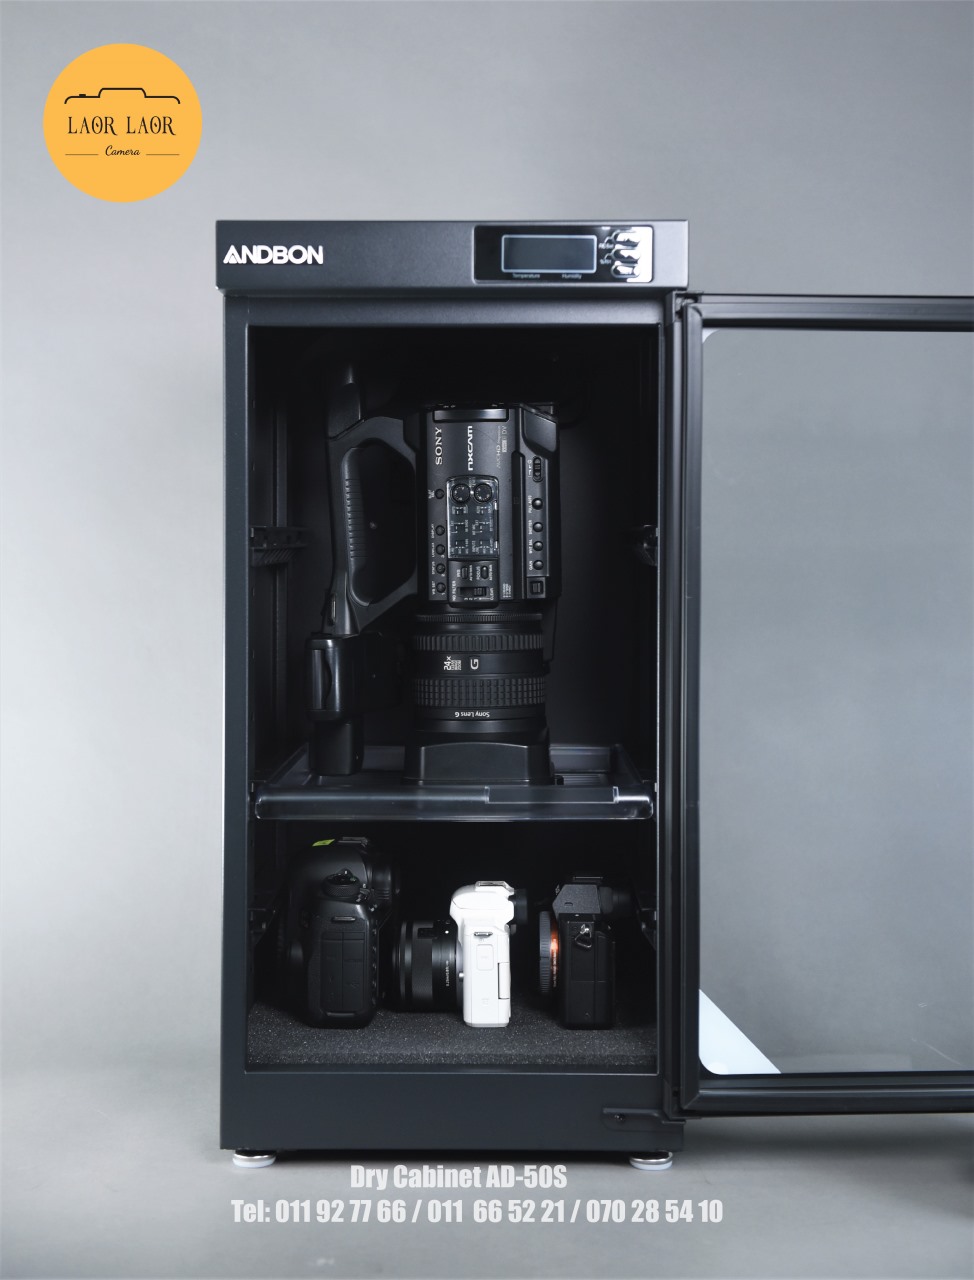 ANDBON AD-50S Dry Cabinet